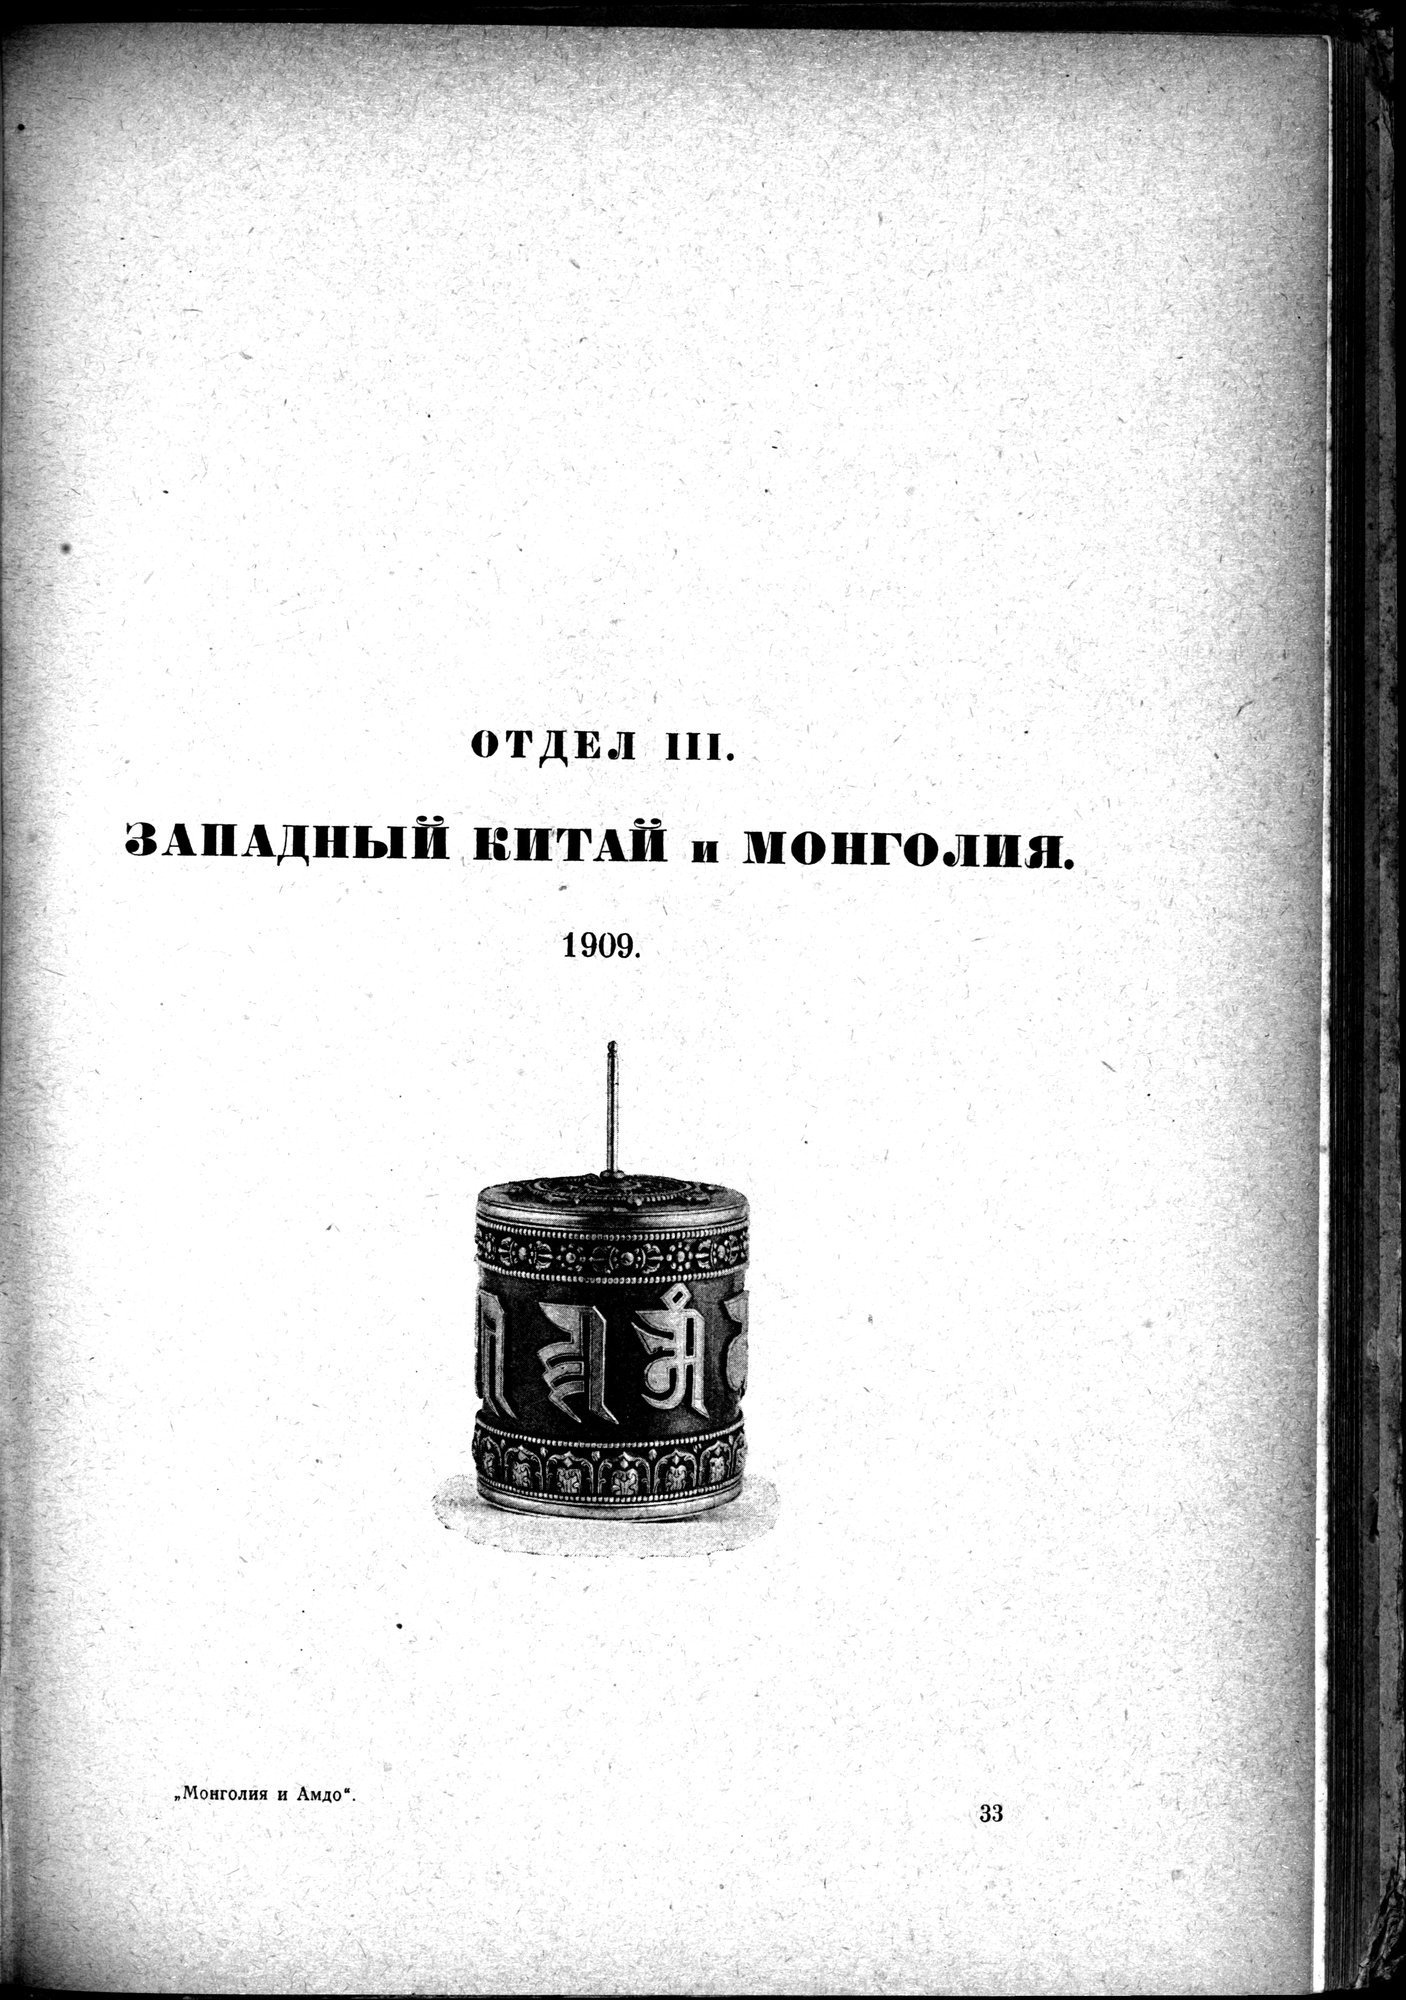 Mongoliya i Amdo i mertby gorod Khara-Khoto : vol.1 / Page 591 (Grayscale High Resolution Image)